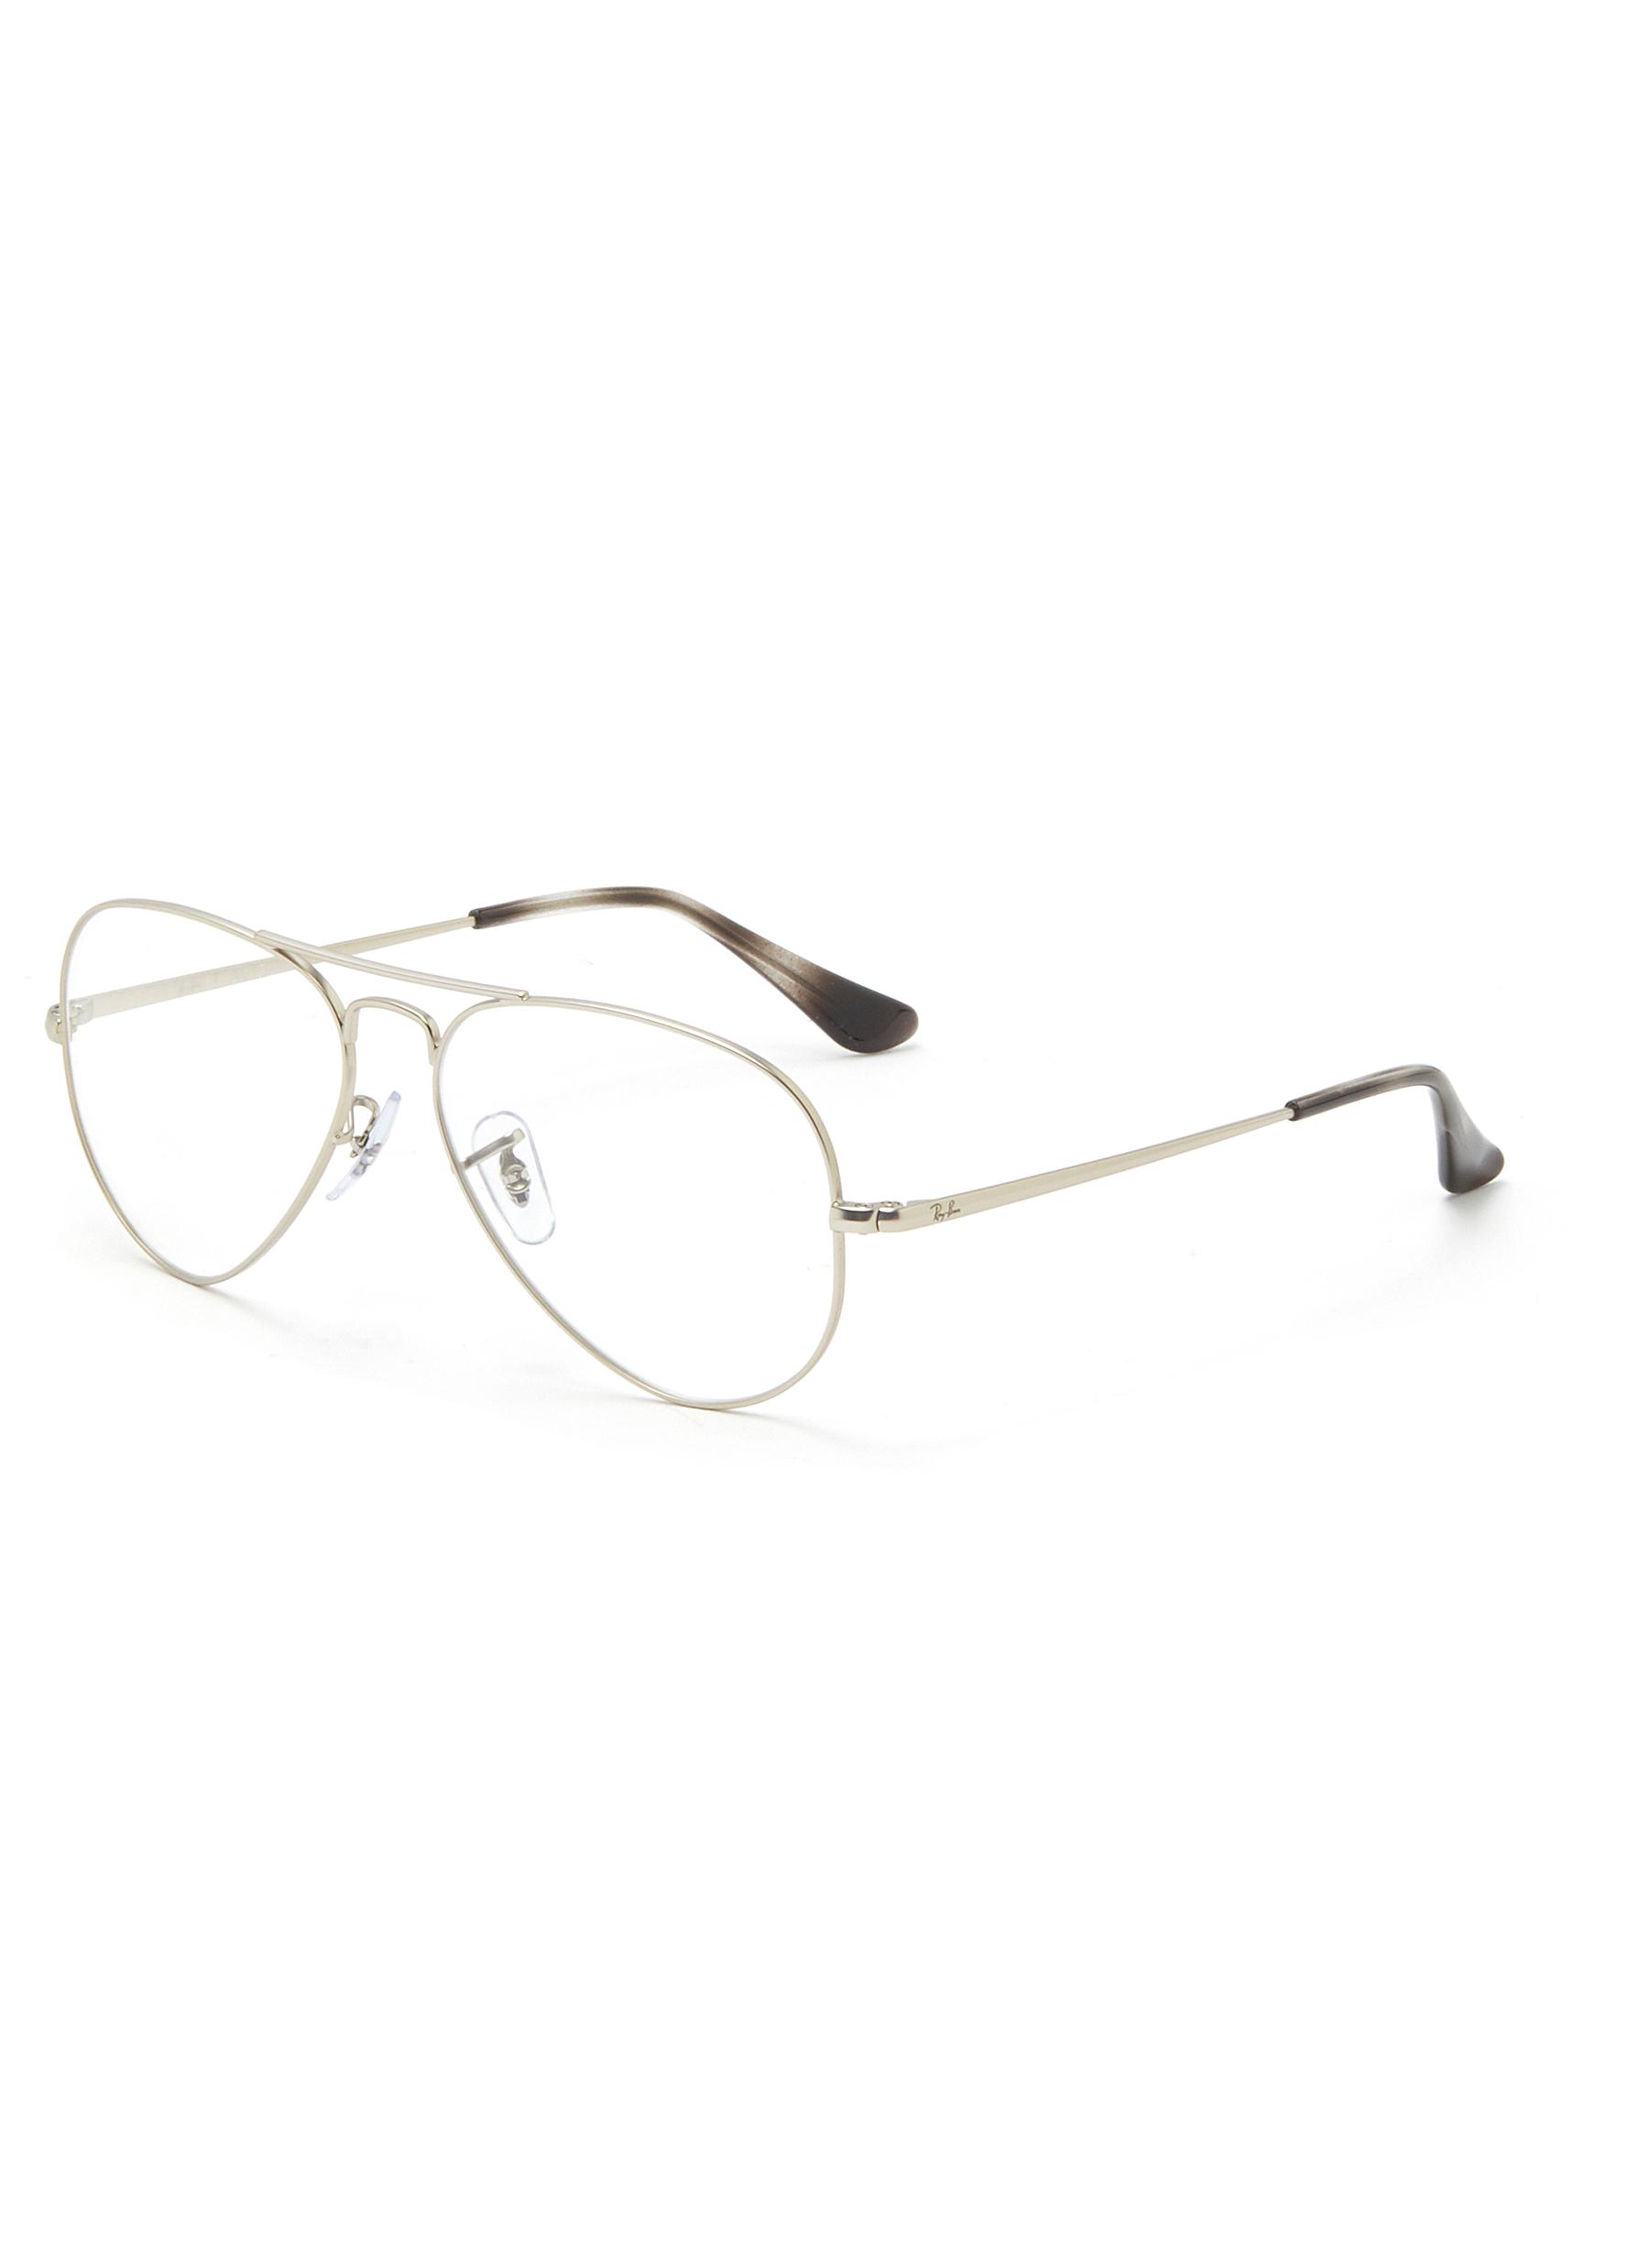 ray ban metal frame eyeglasses